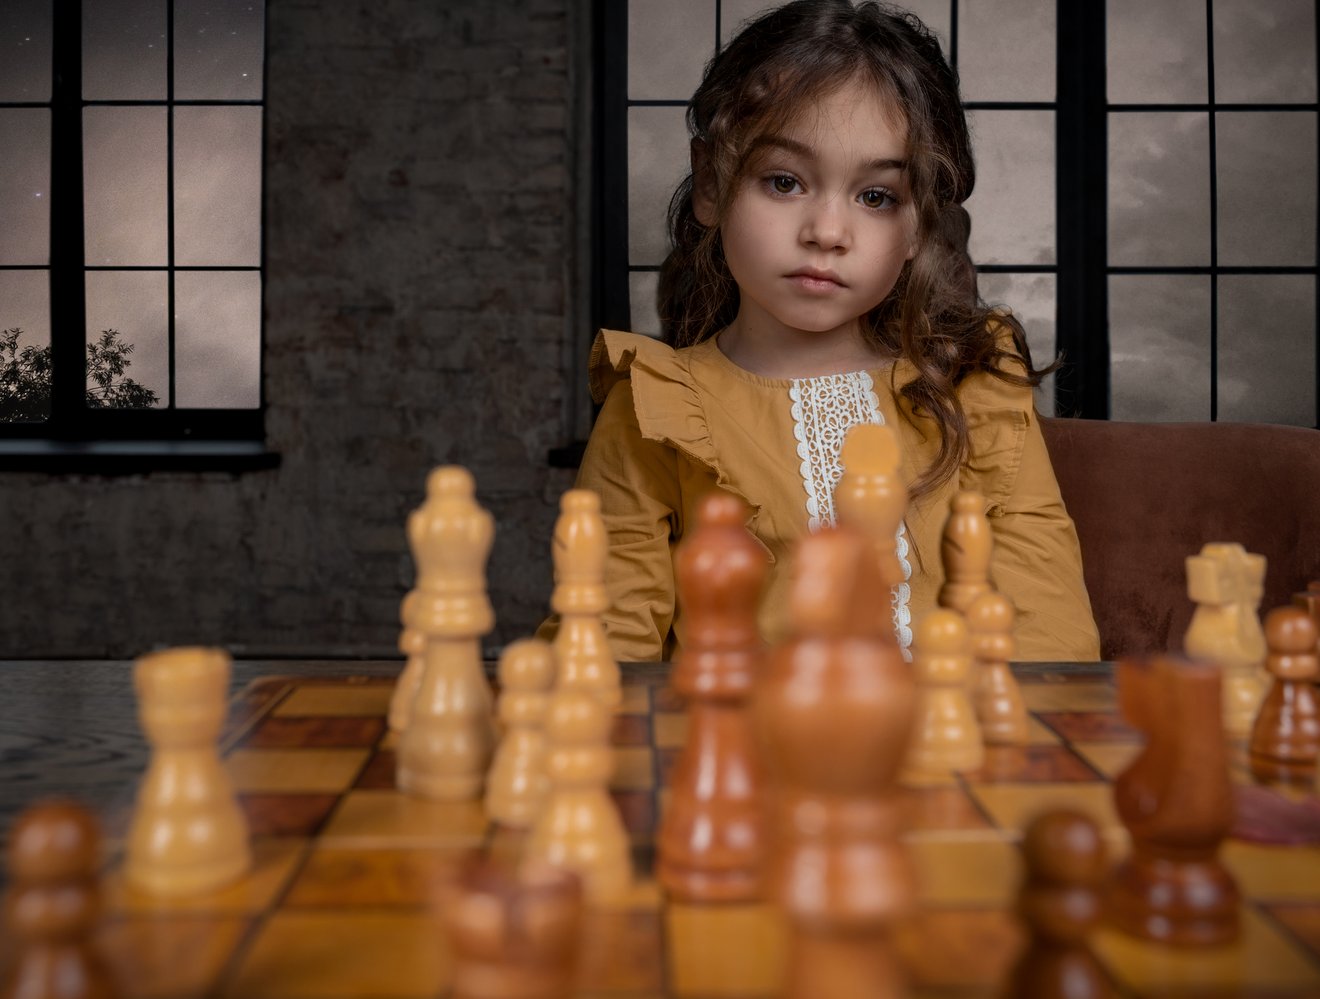 The Chess Princess-Seed Nft